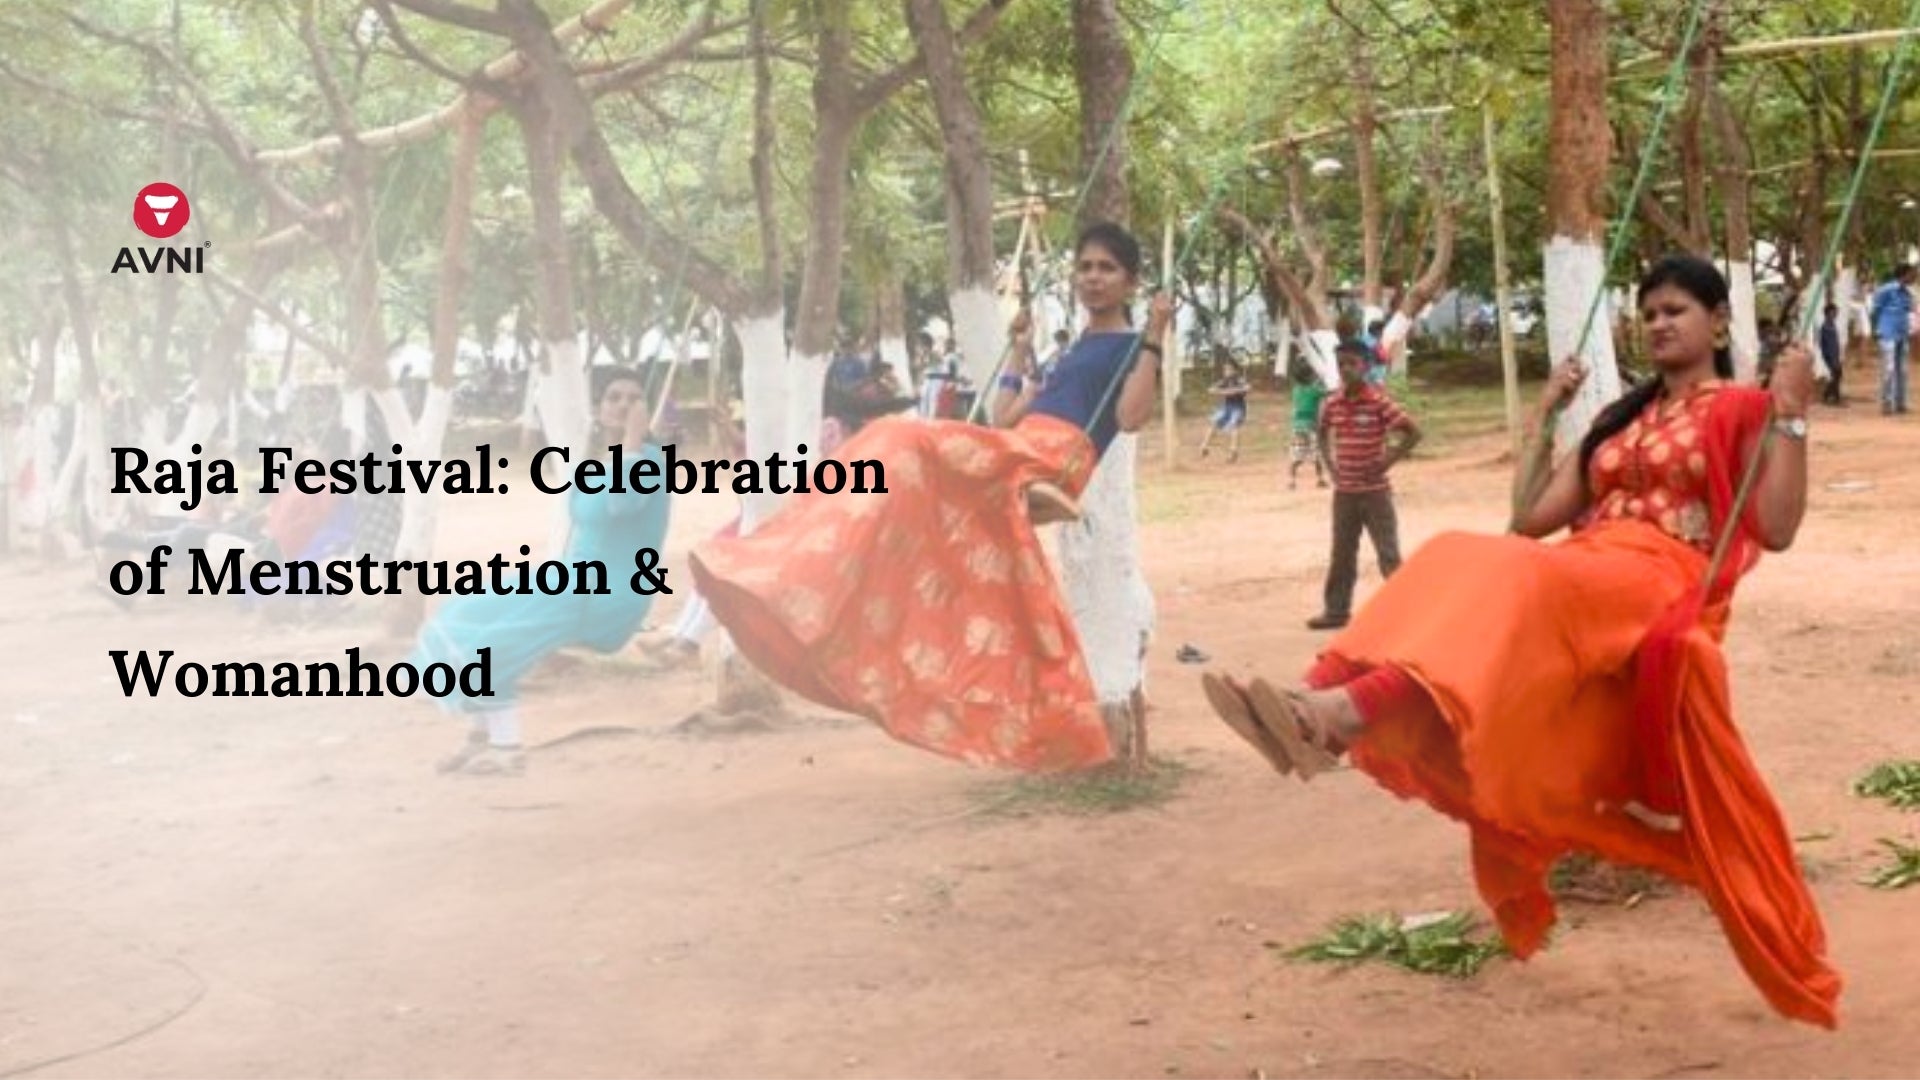 Raja Festival: Celebration of Menstruation & Womanhood